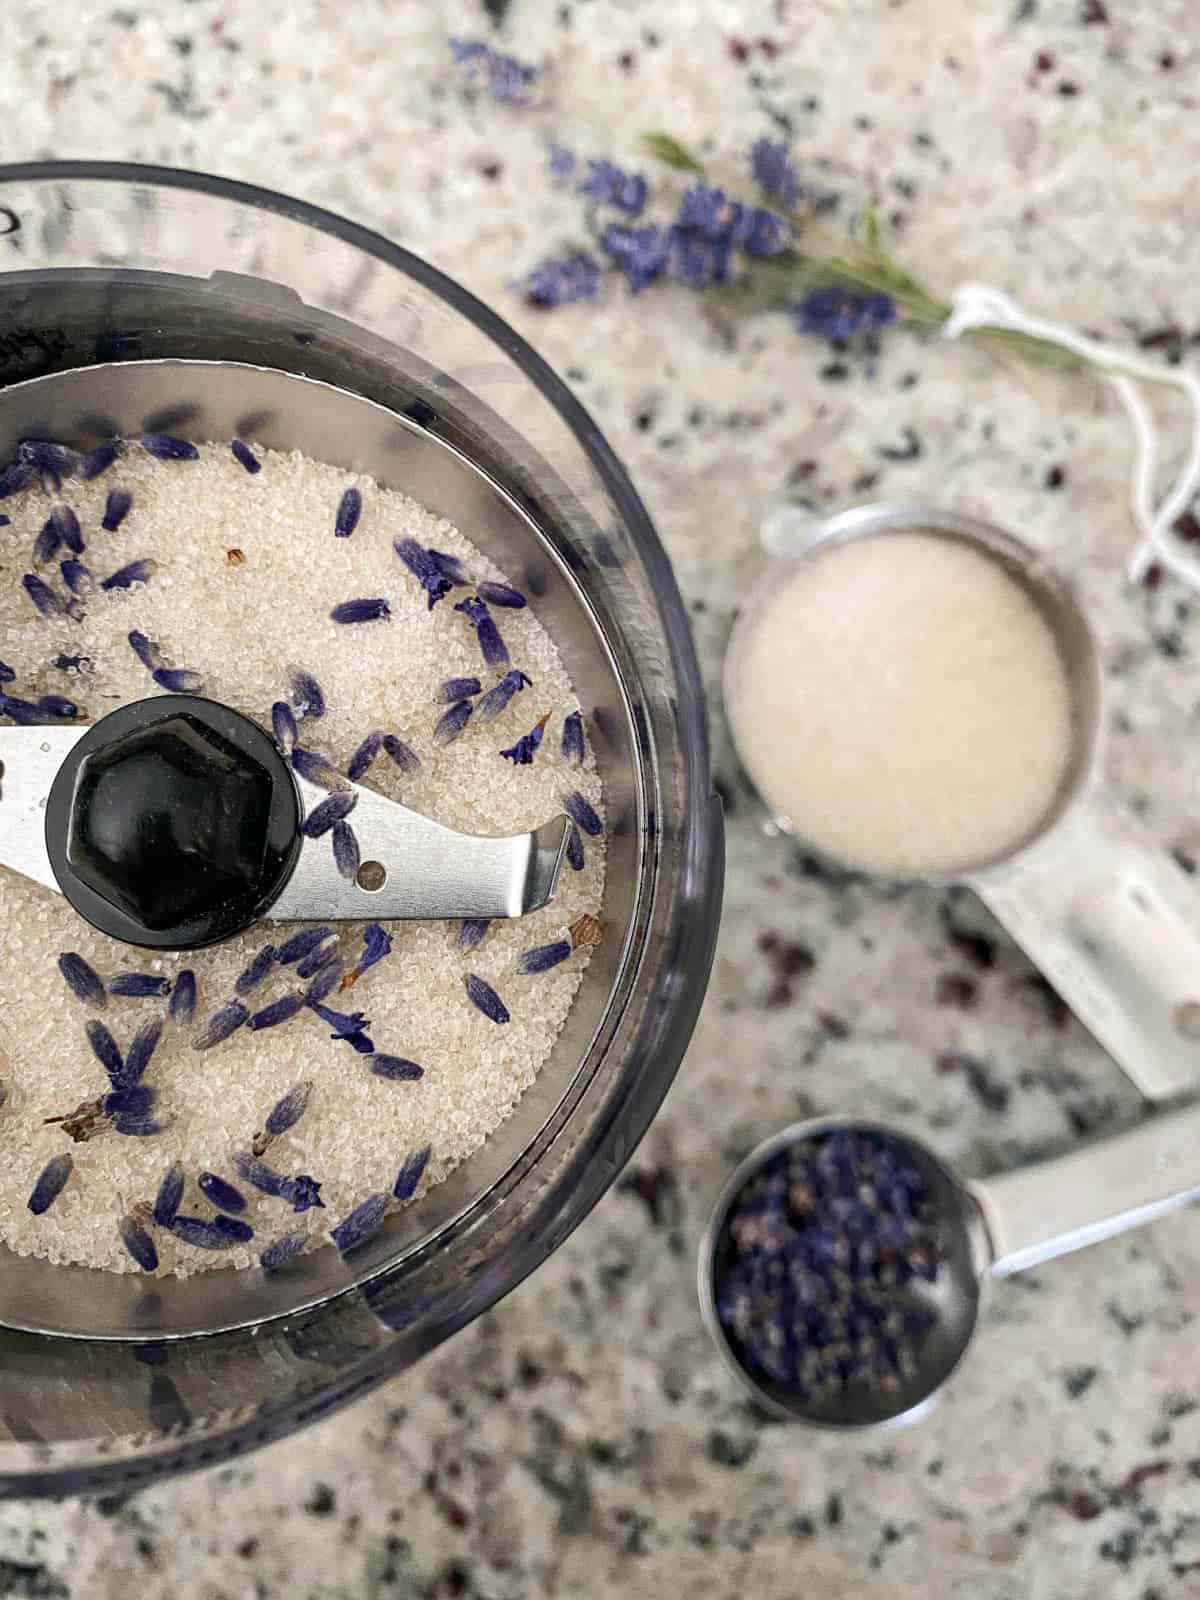 Making Lavender Sugar with dried lavender, step 1.